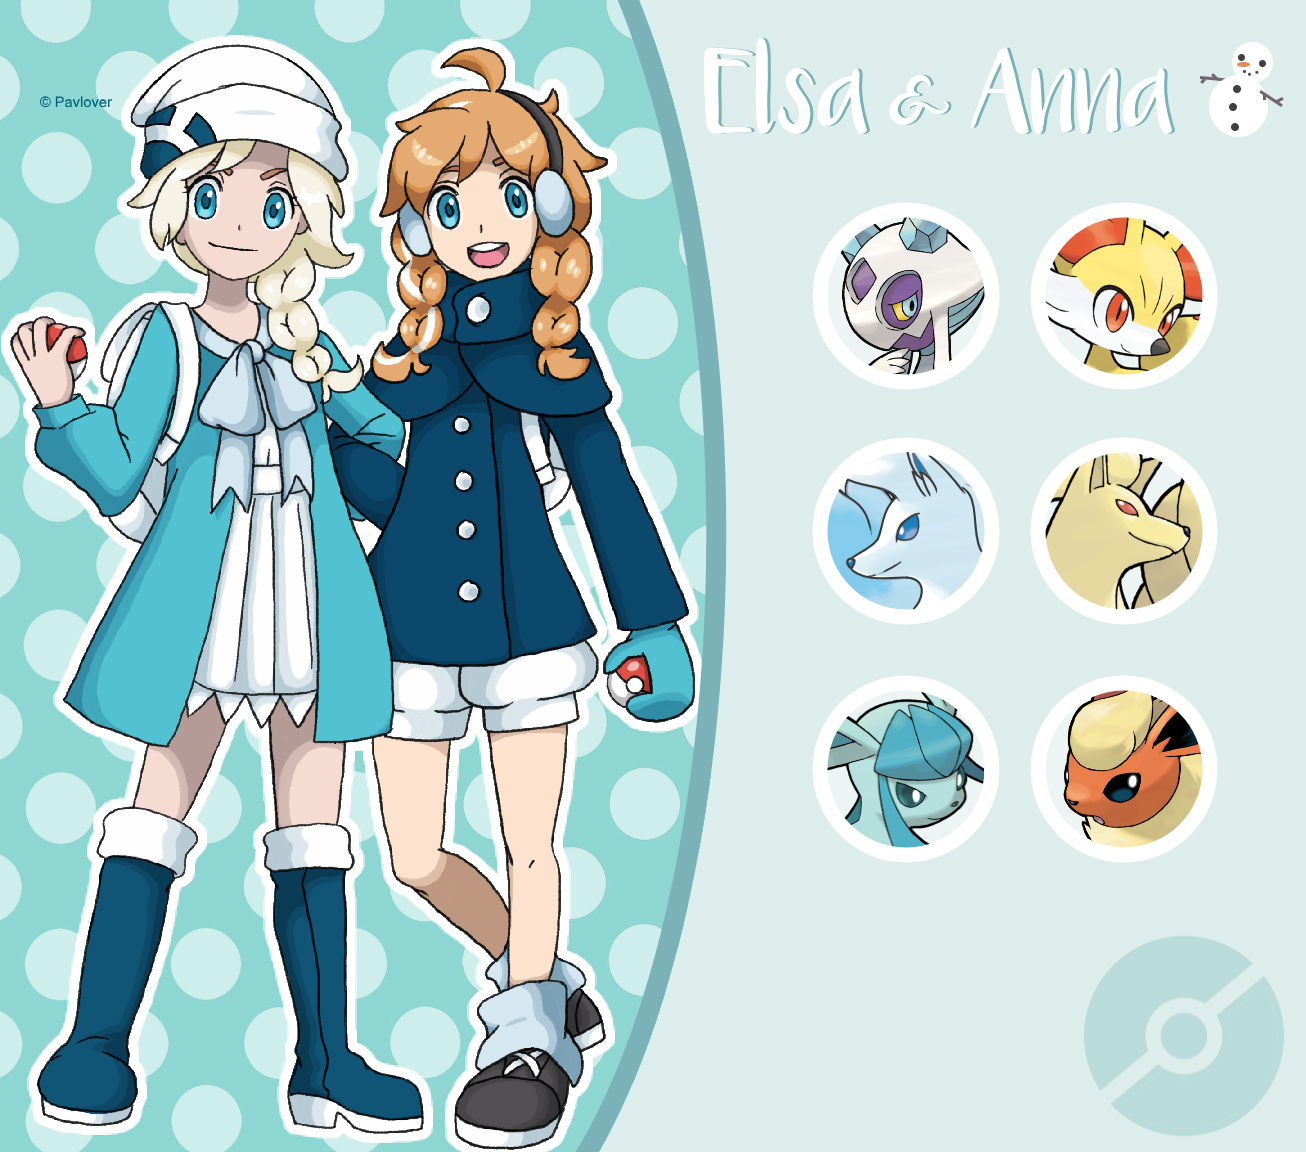 Disney Pokemon trainer : Elsa and Anna